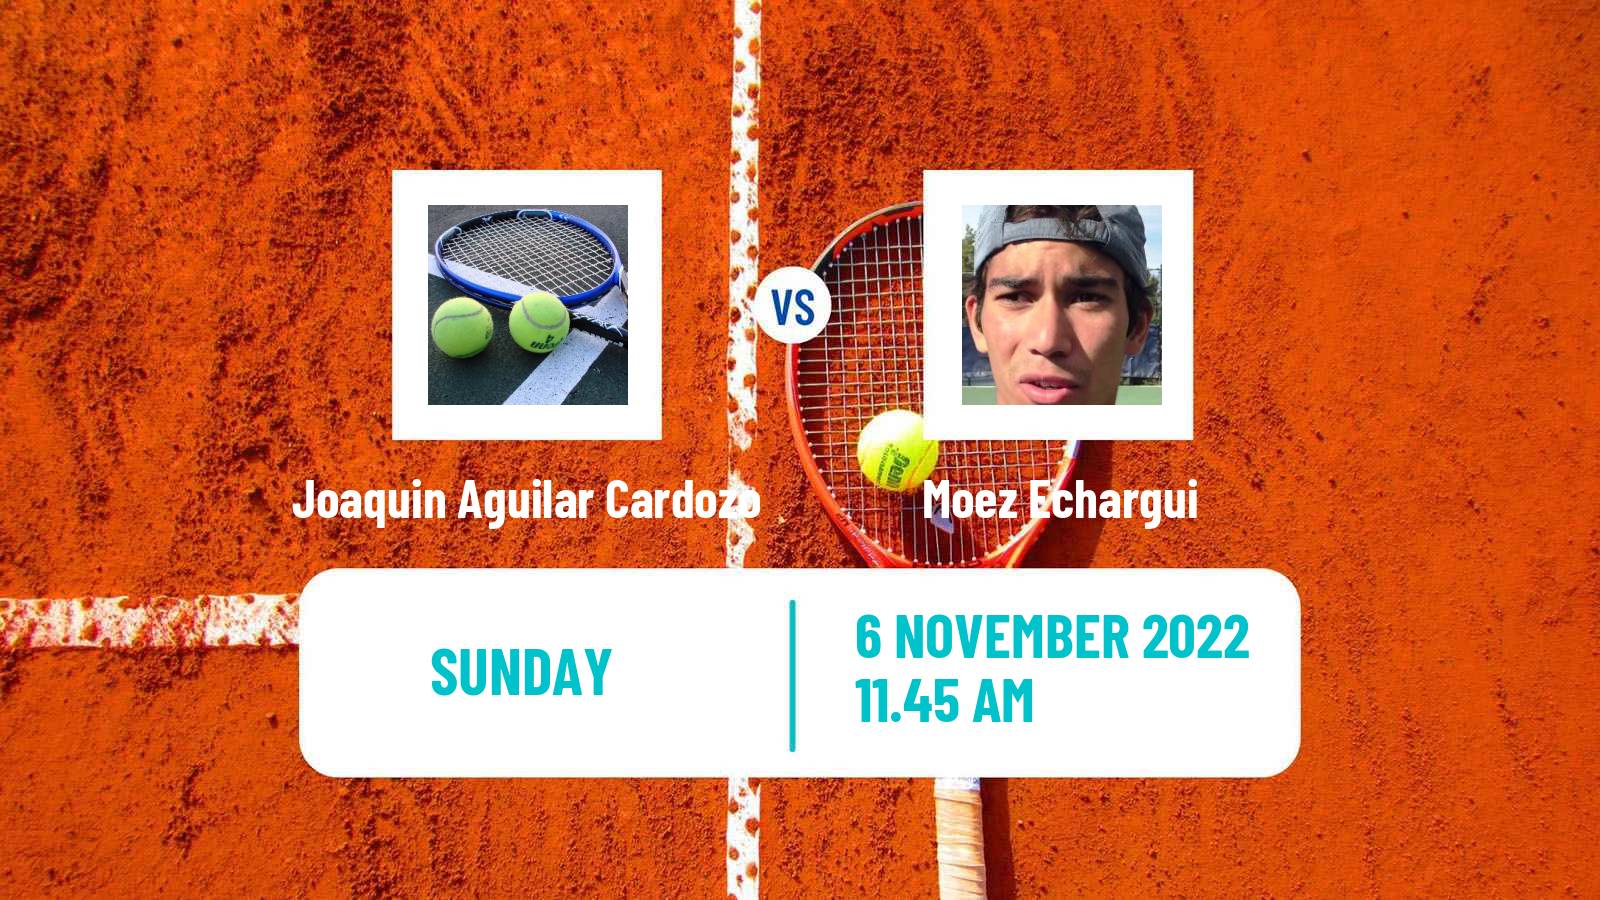 Tennis ATP Challenger Joaquin Aguilar Cardozo - Moez Echargui